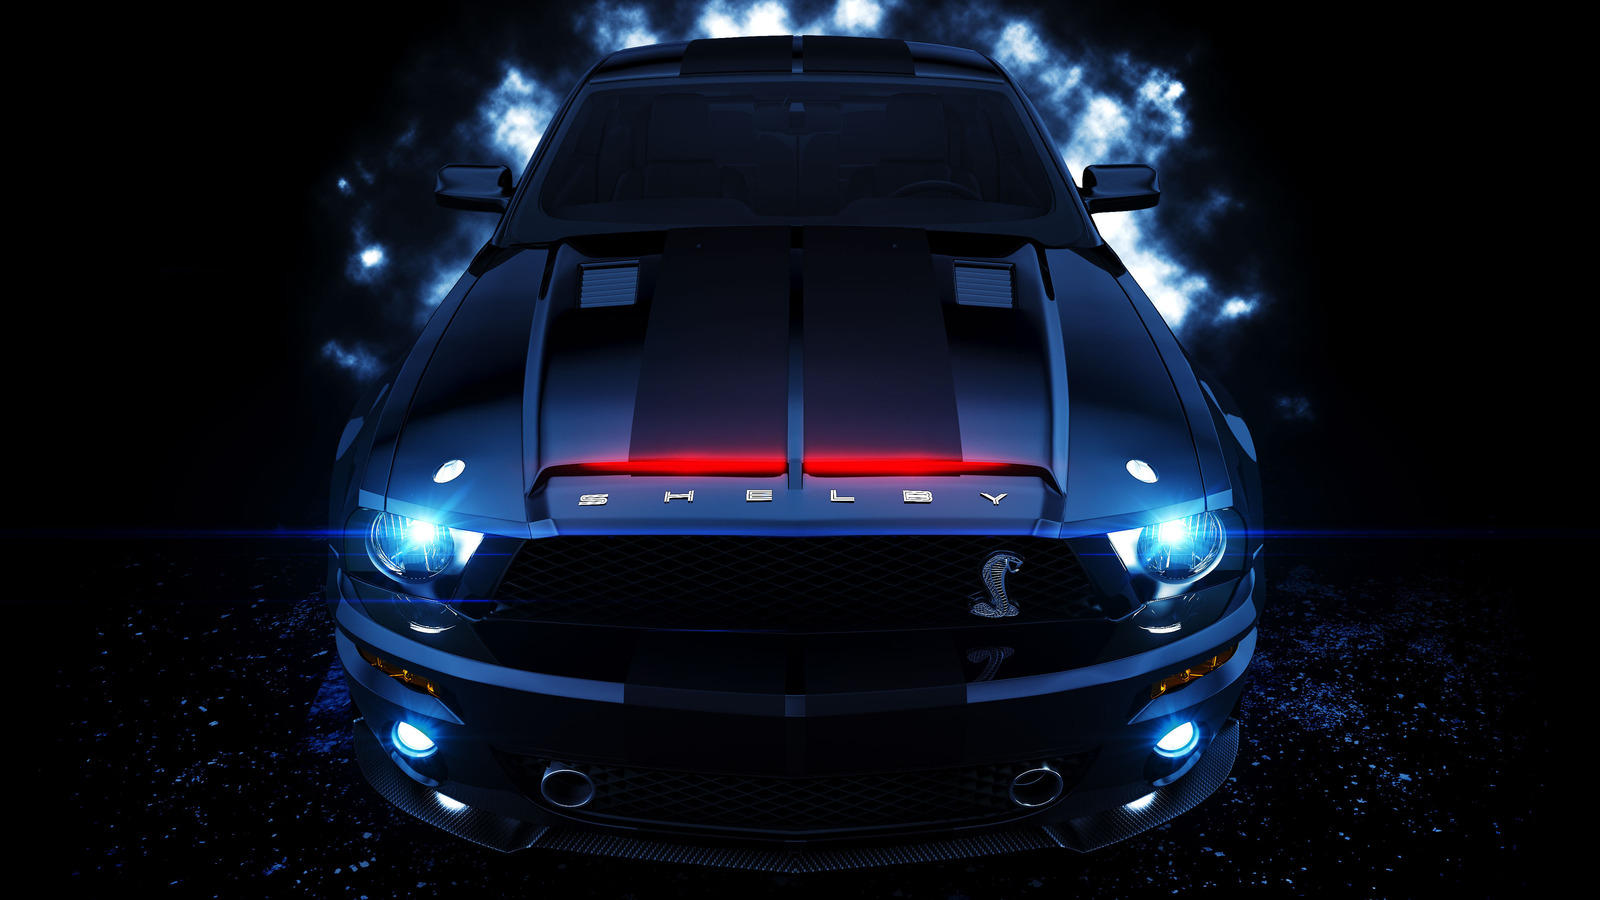 Ford Mustang Cobra Hd Wallpaper Cars Wallpaper Better